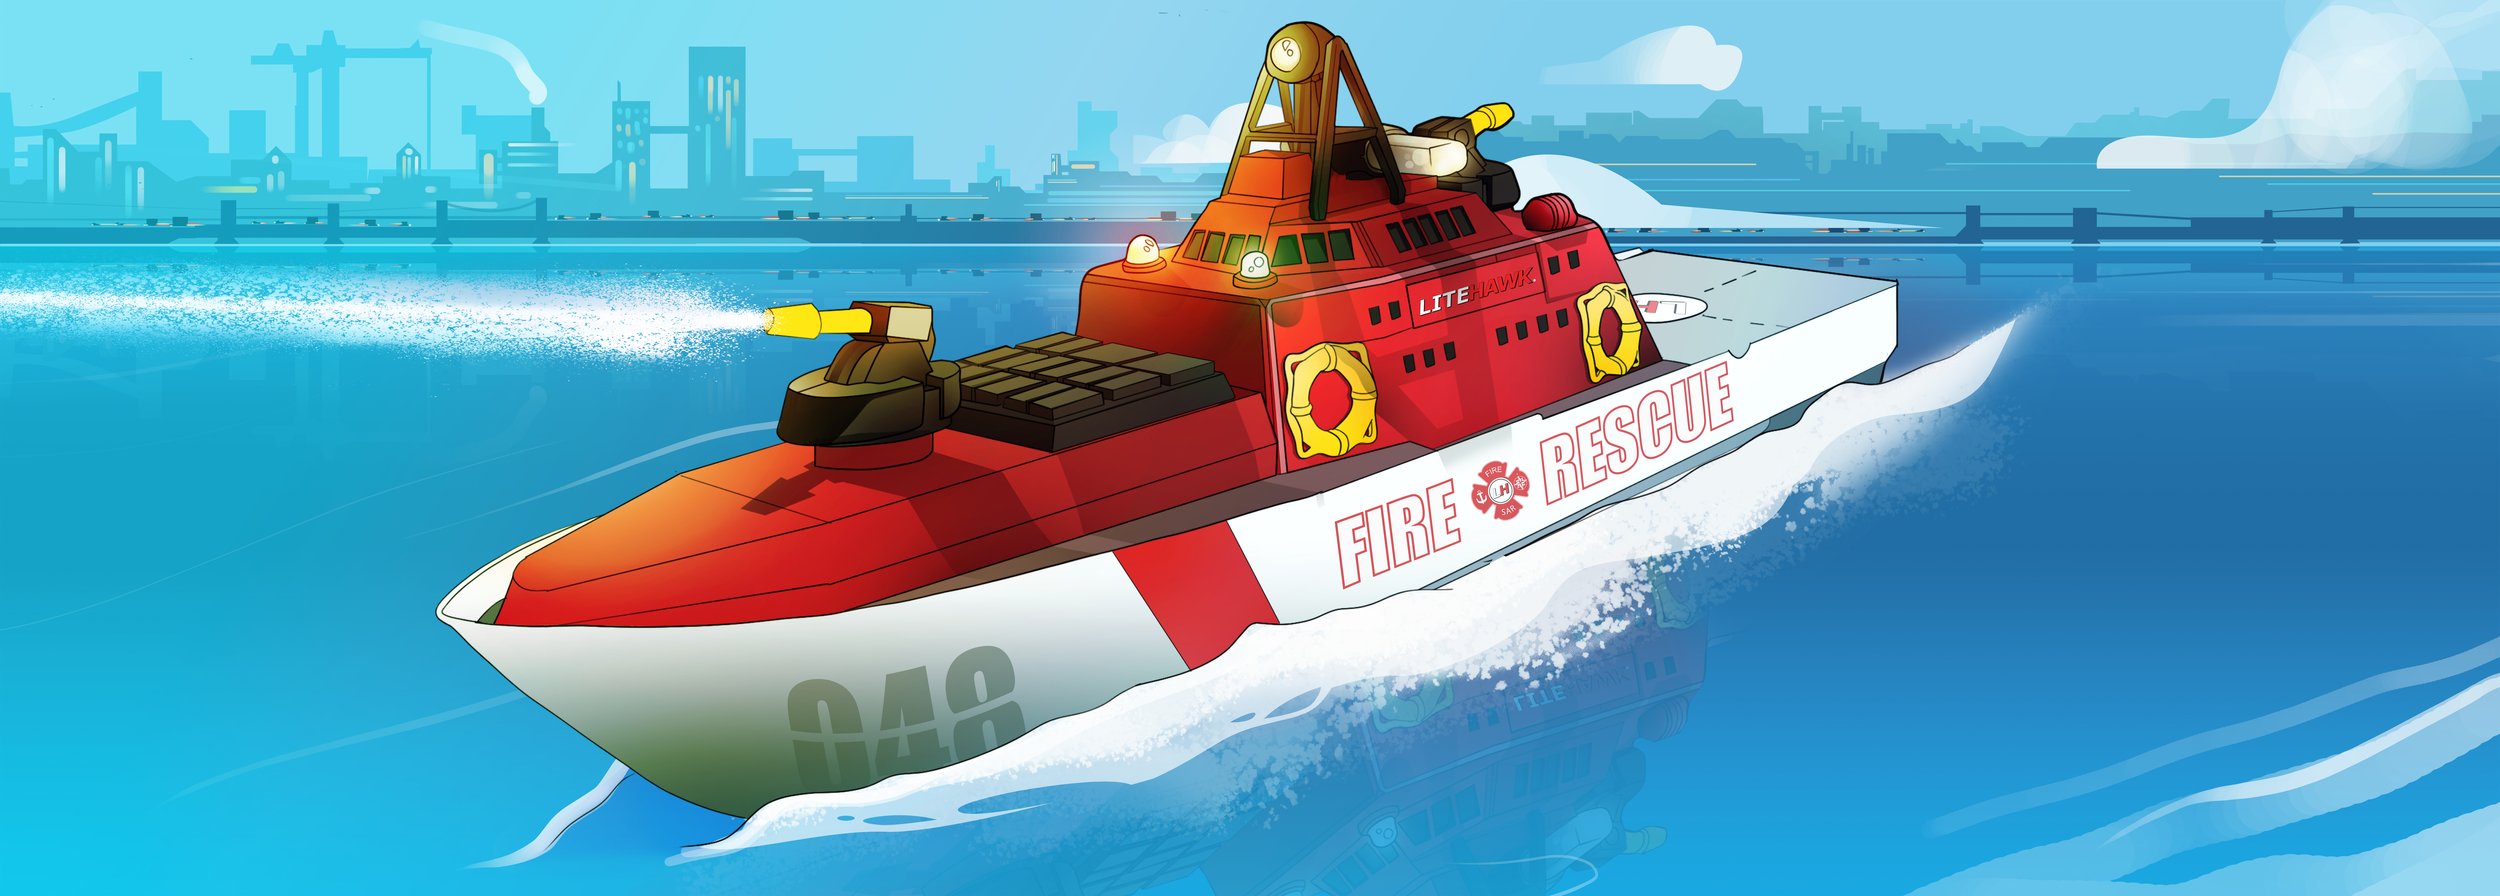 fire rescue illustration.jpg